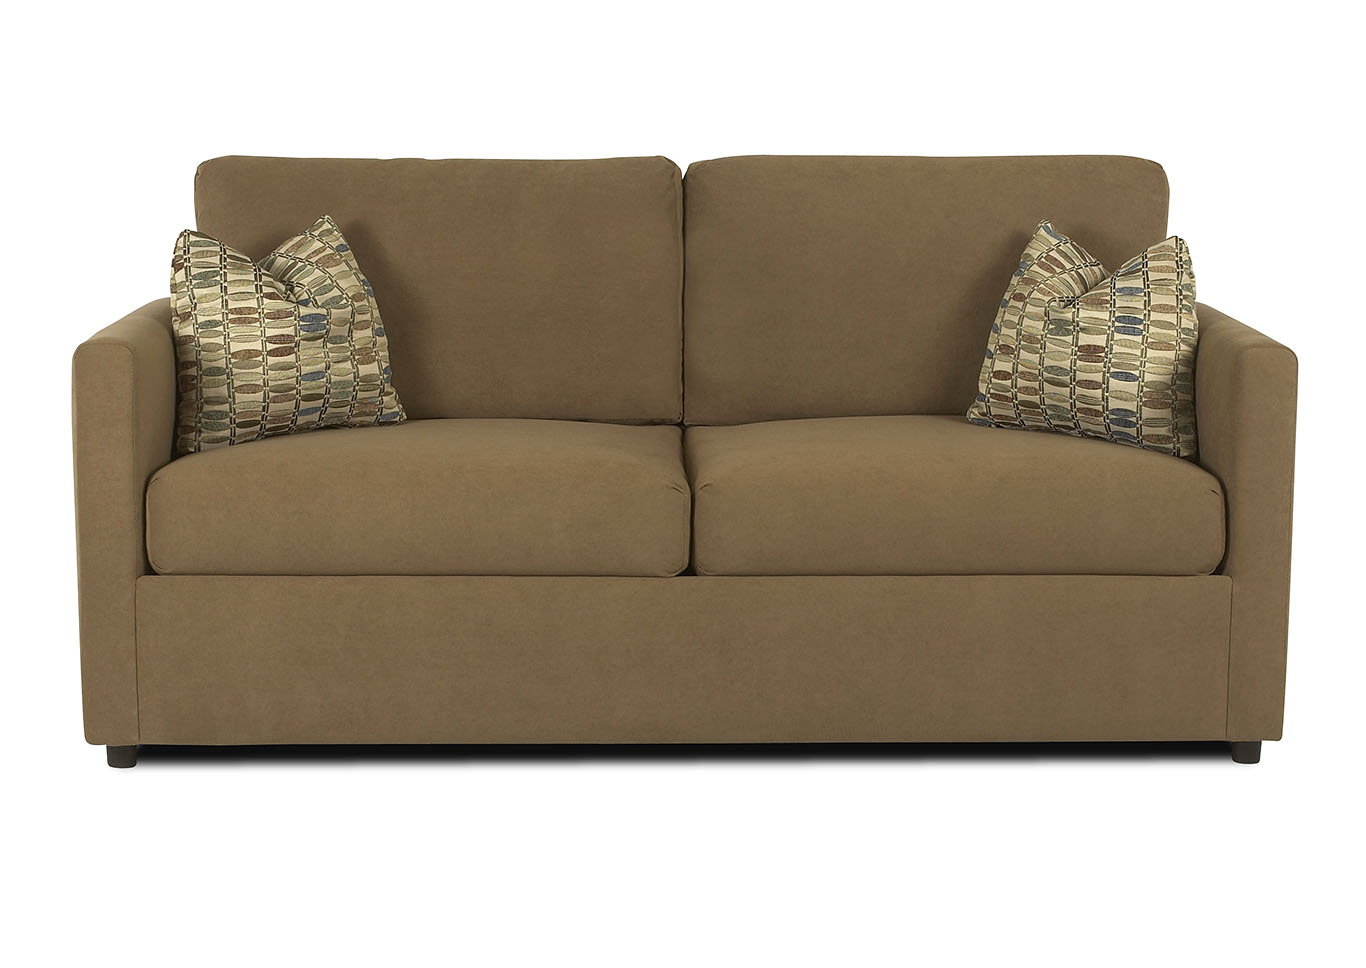 Jacobs Brown Stationary Fabric Sofa,Klaussner Home Furnishings